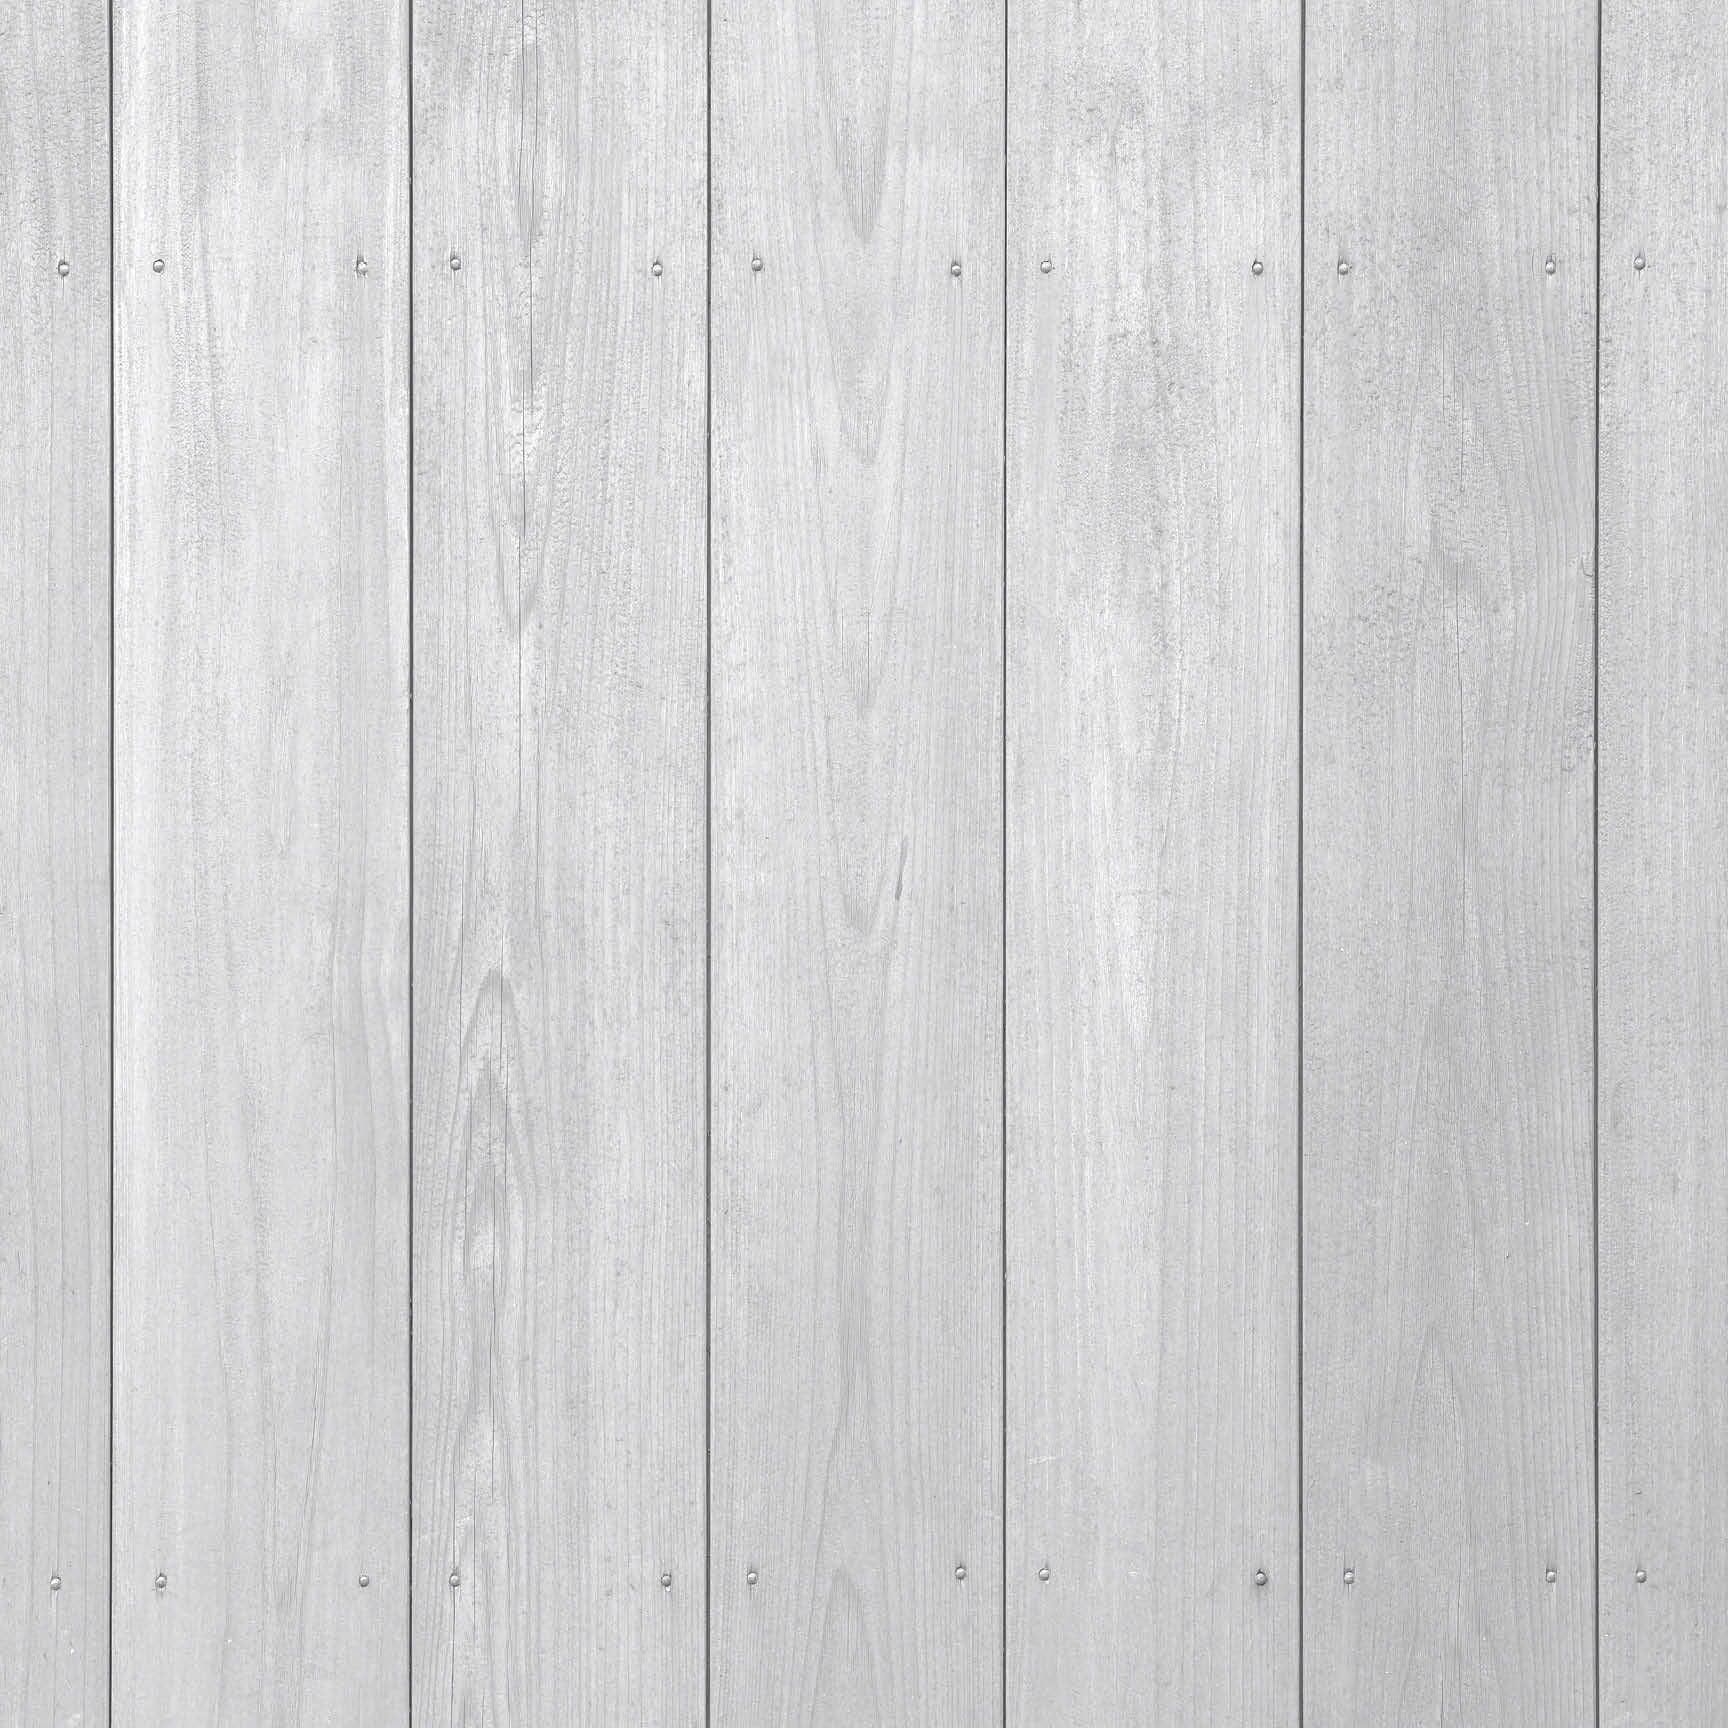 light gray wood background